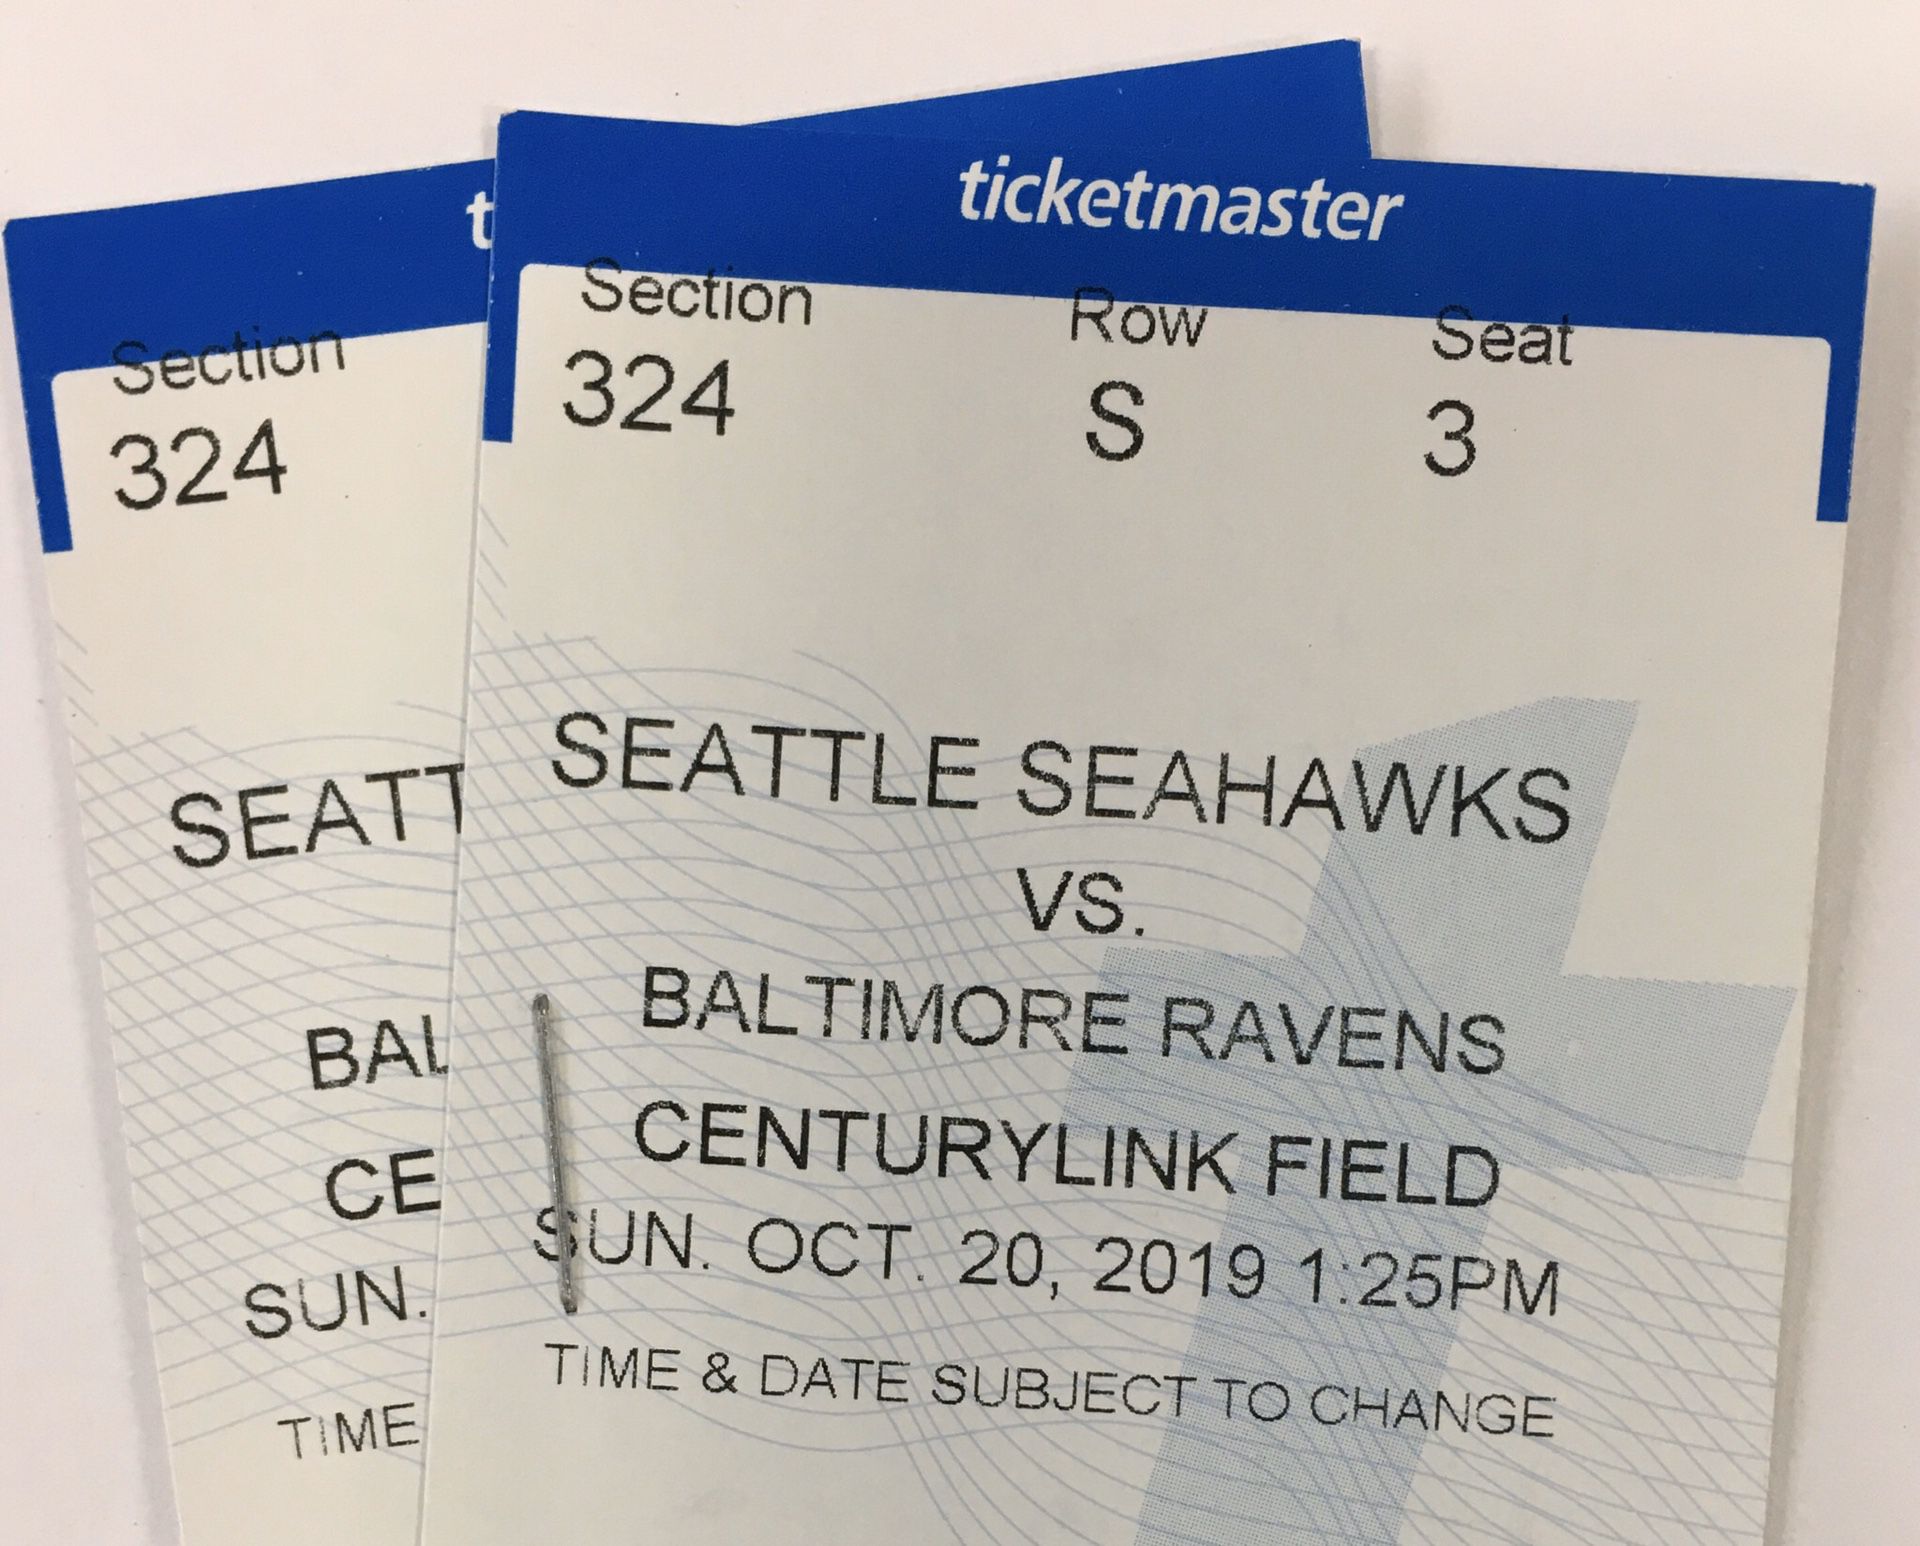 Seahawks vs ravens tickets